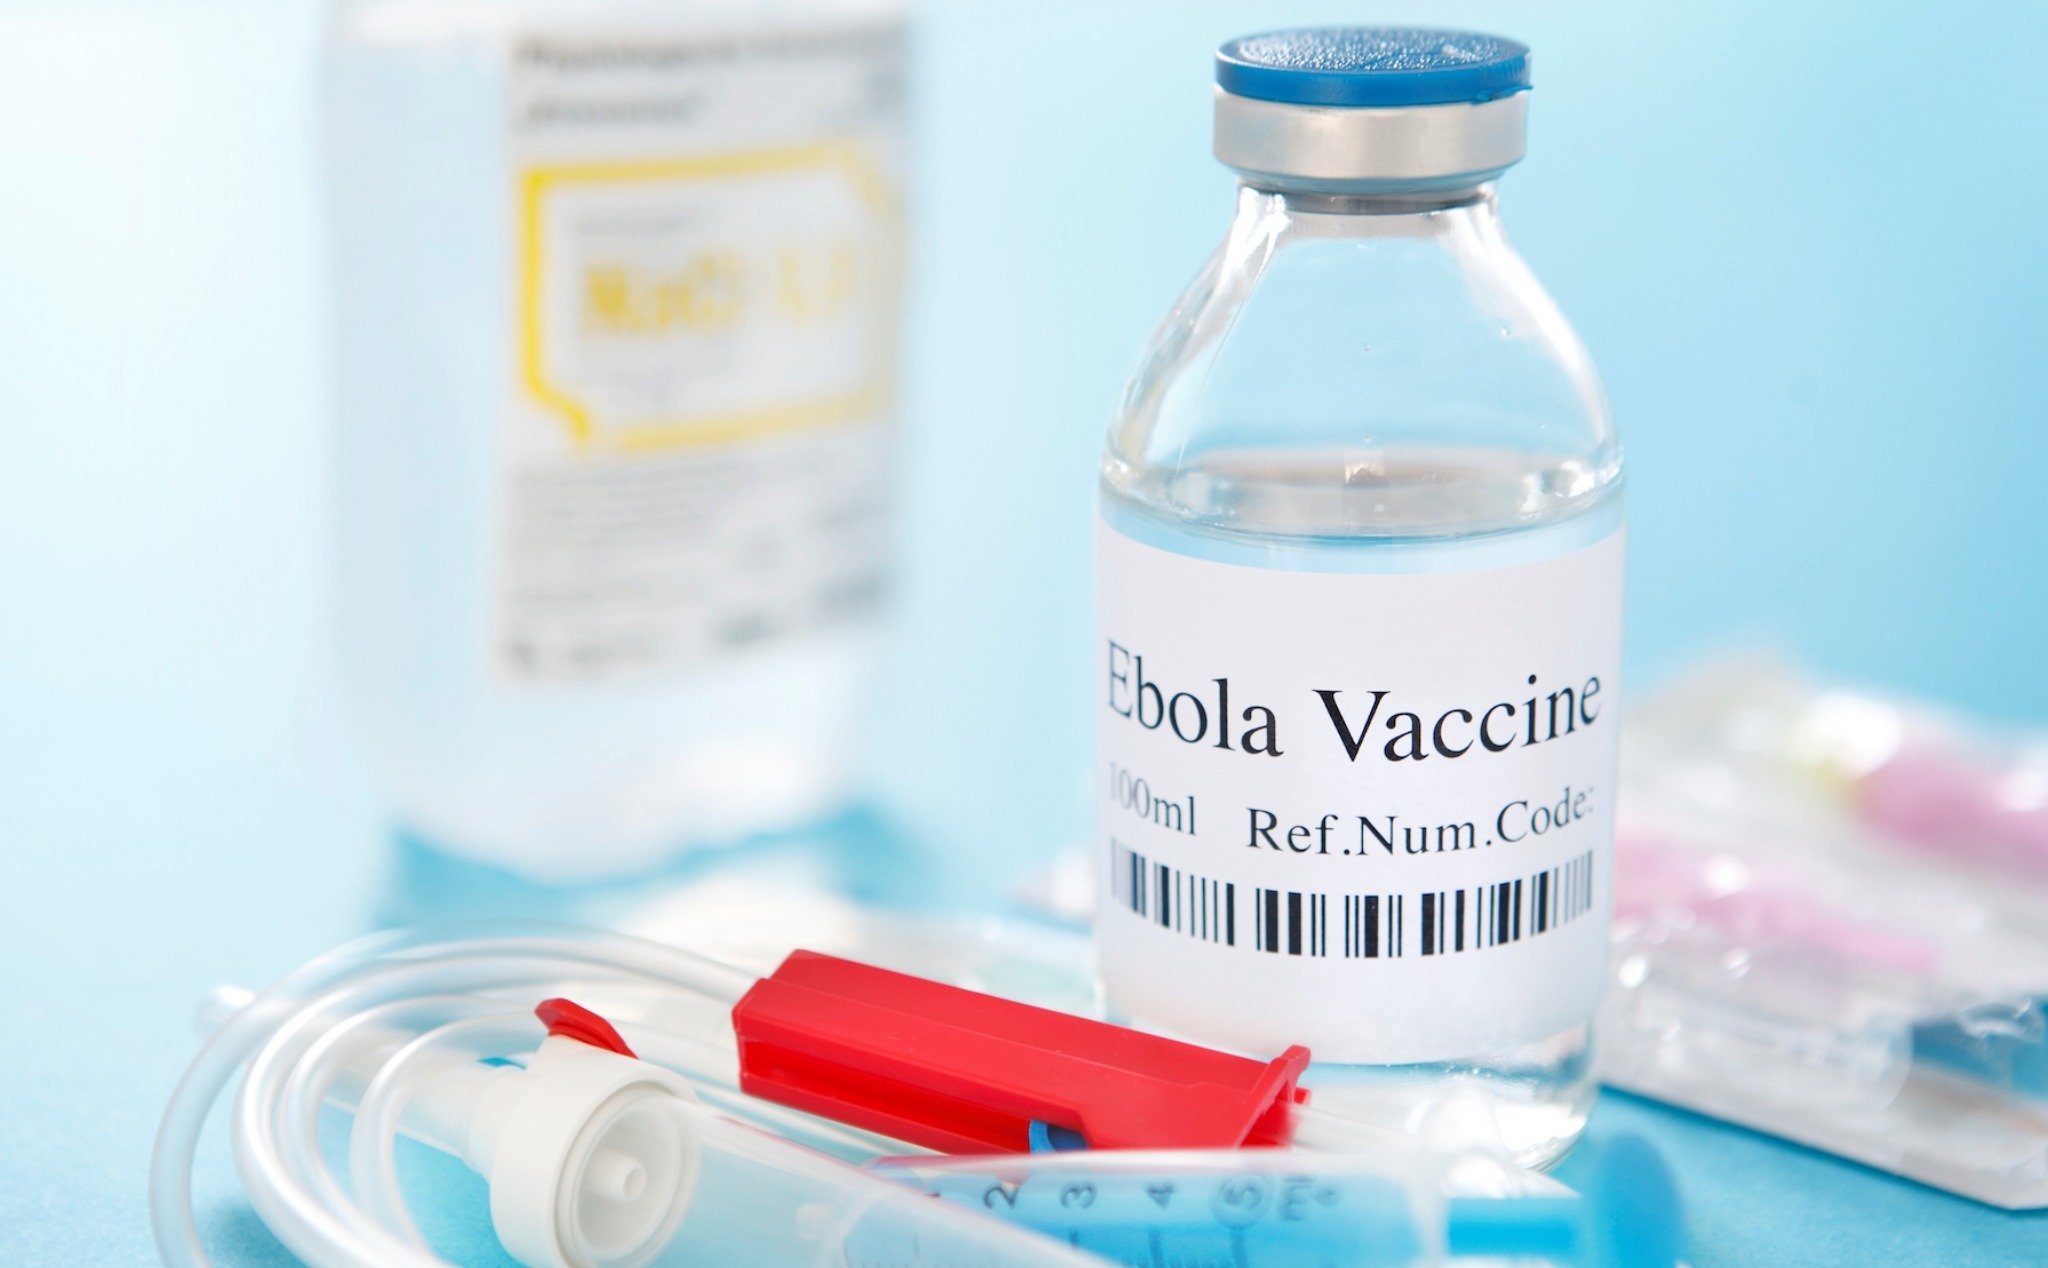 Ebola_vaccine.jpg